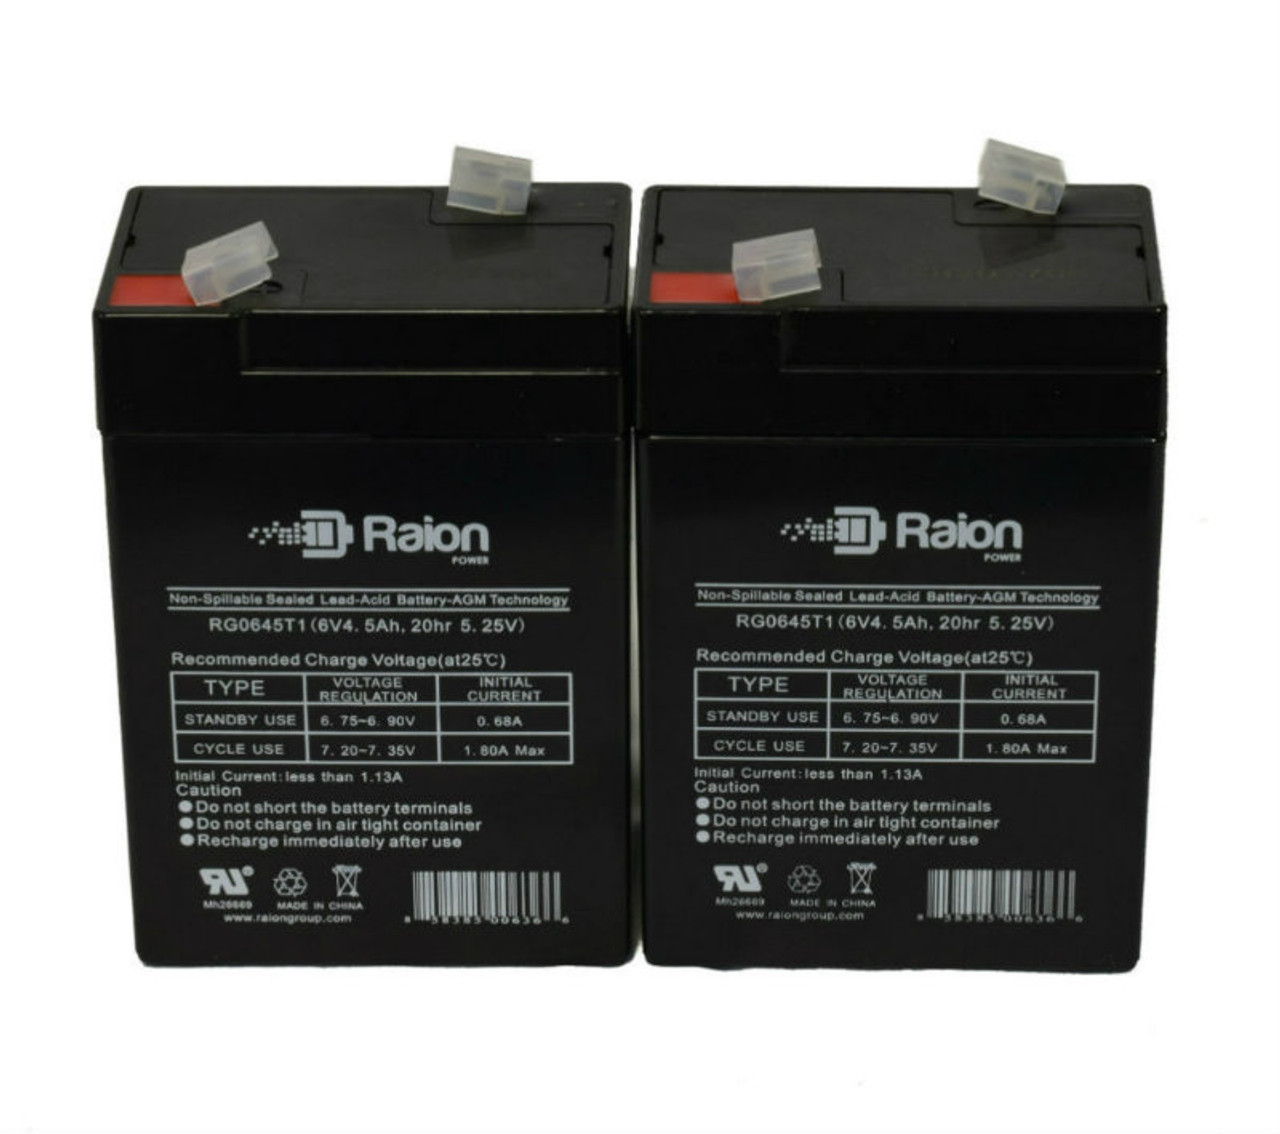 Raion Power 6V 4.5Ah Replacement Emergency Light Battery for Elan 1661B - 2 Pack